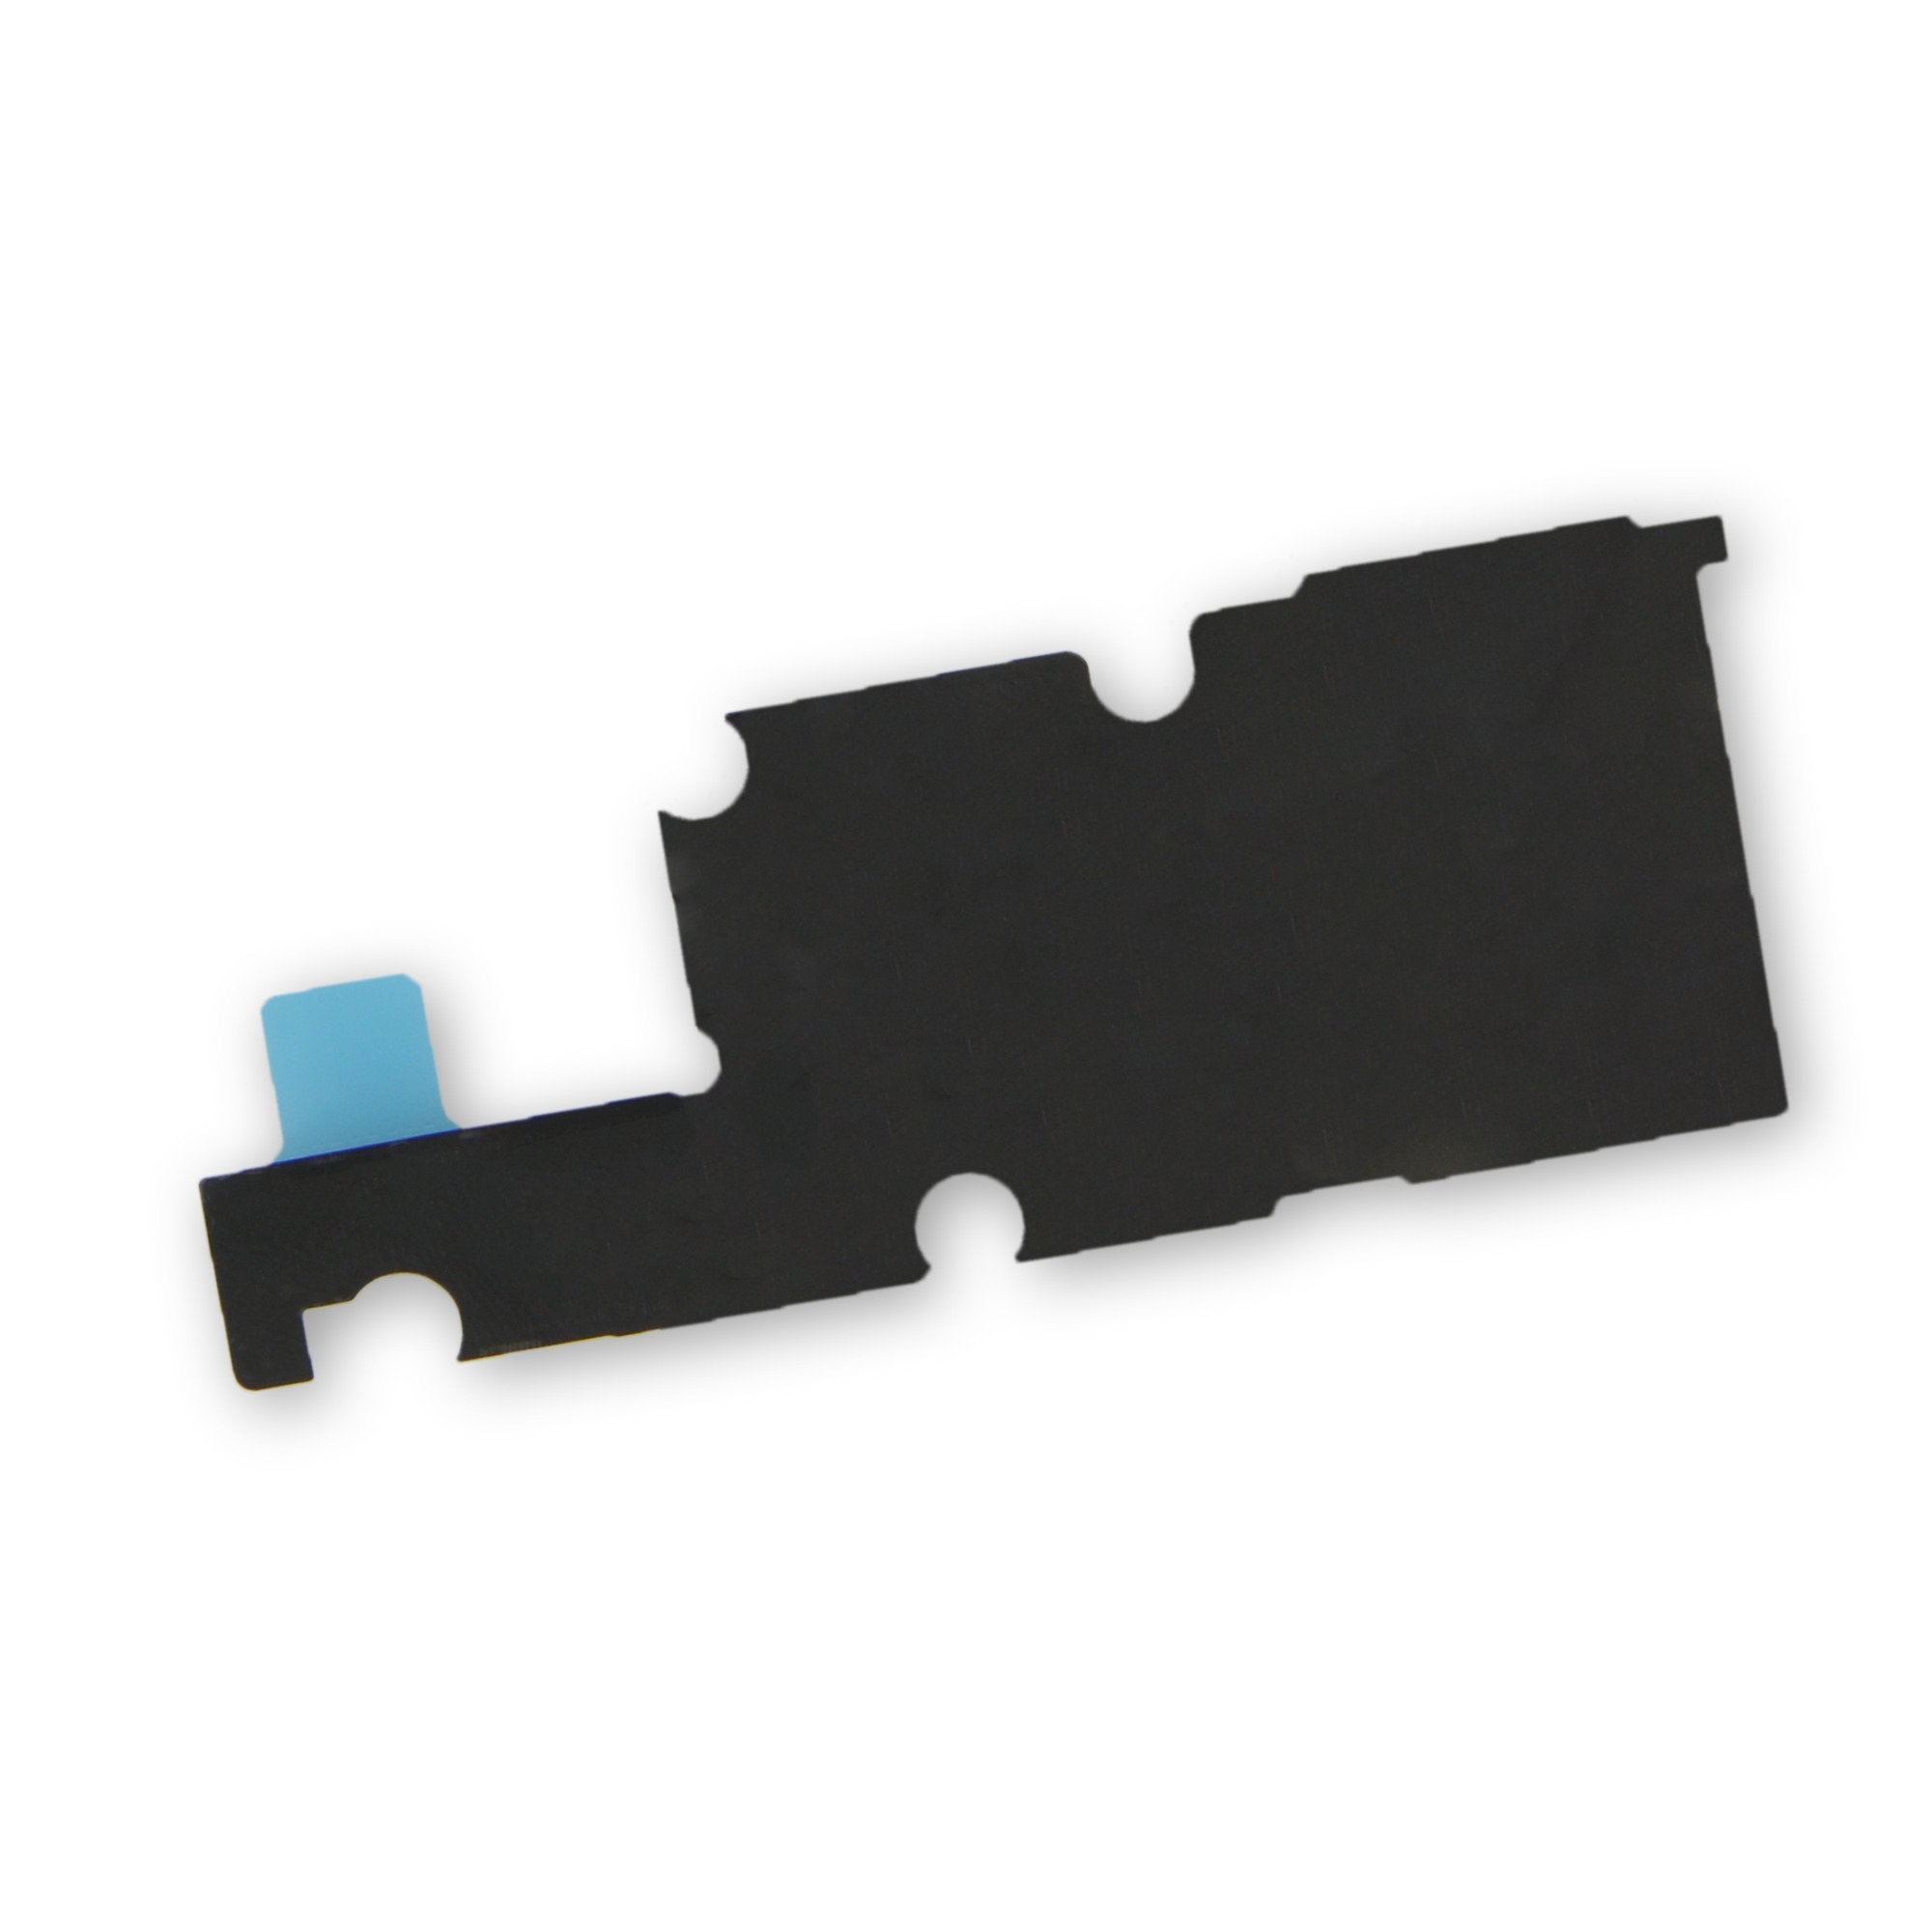 iPhone X Logic Board Back Shield Sticker